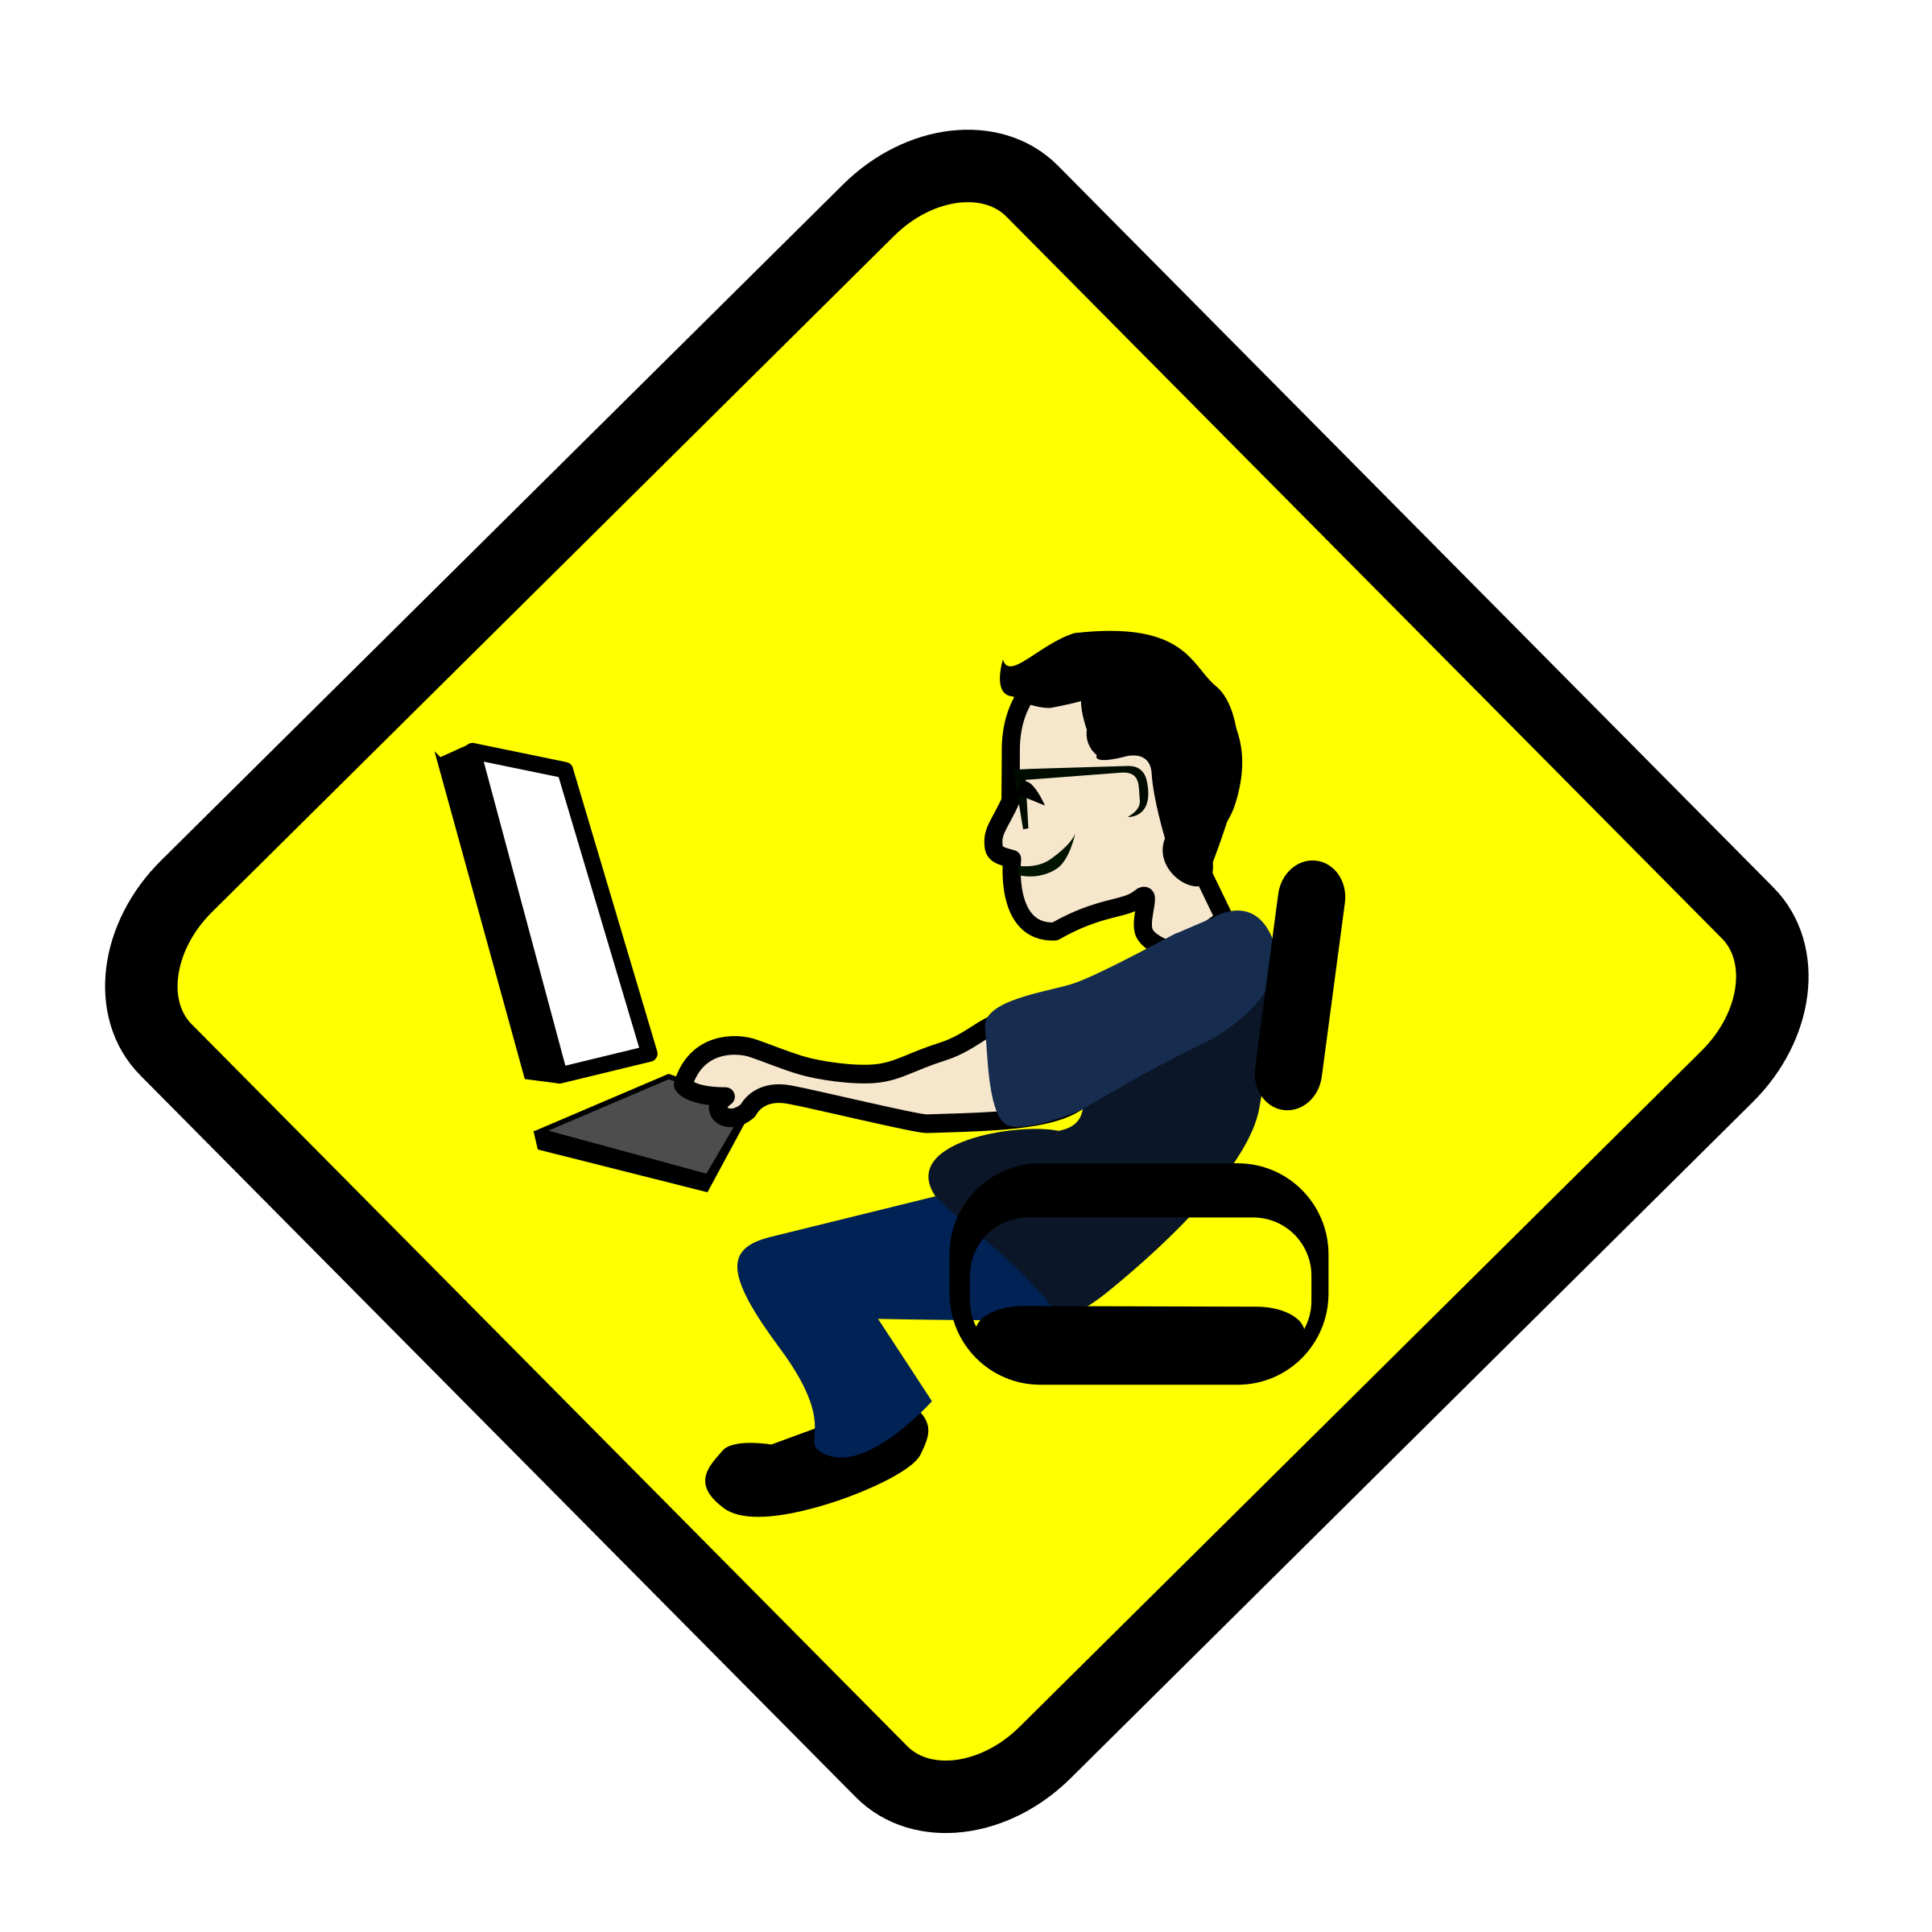 Computer User Warning Sign